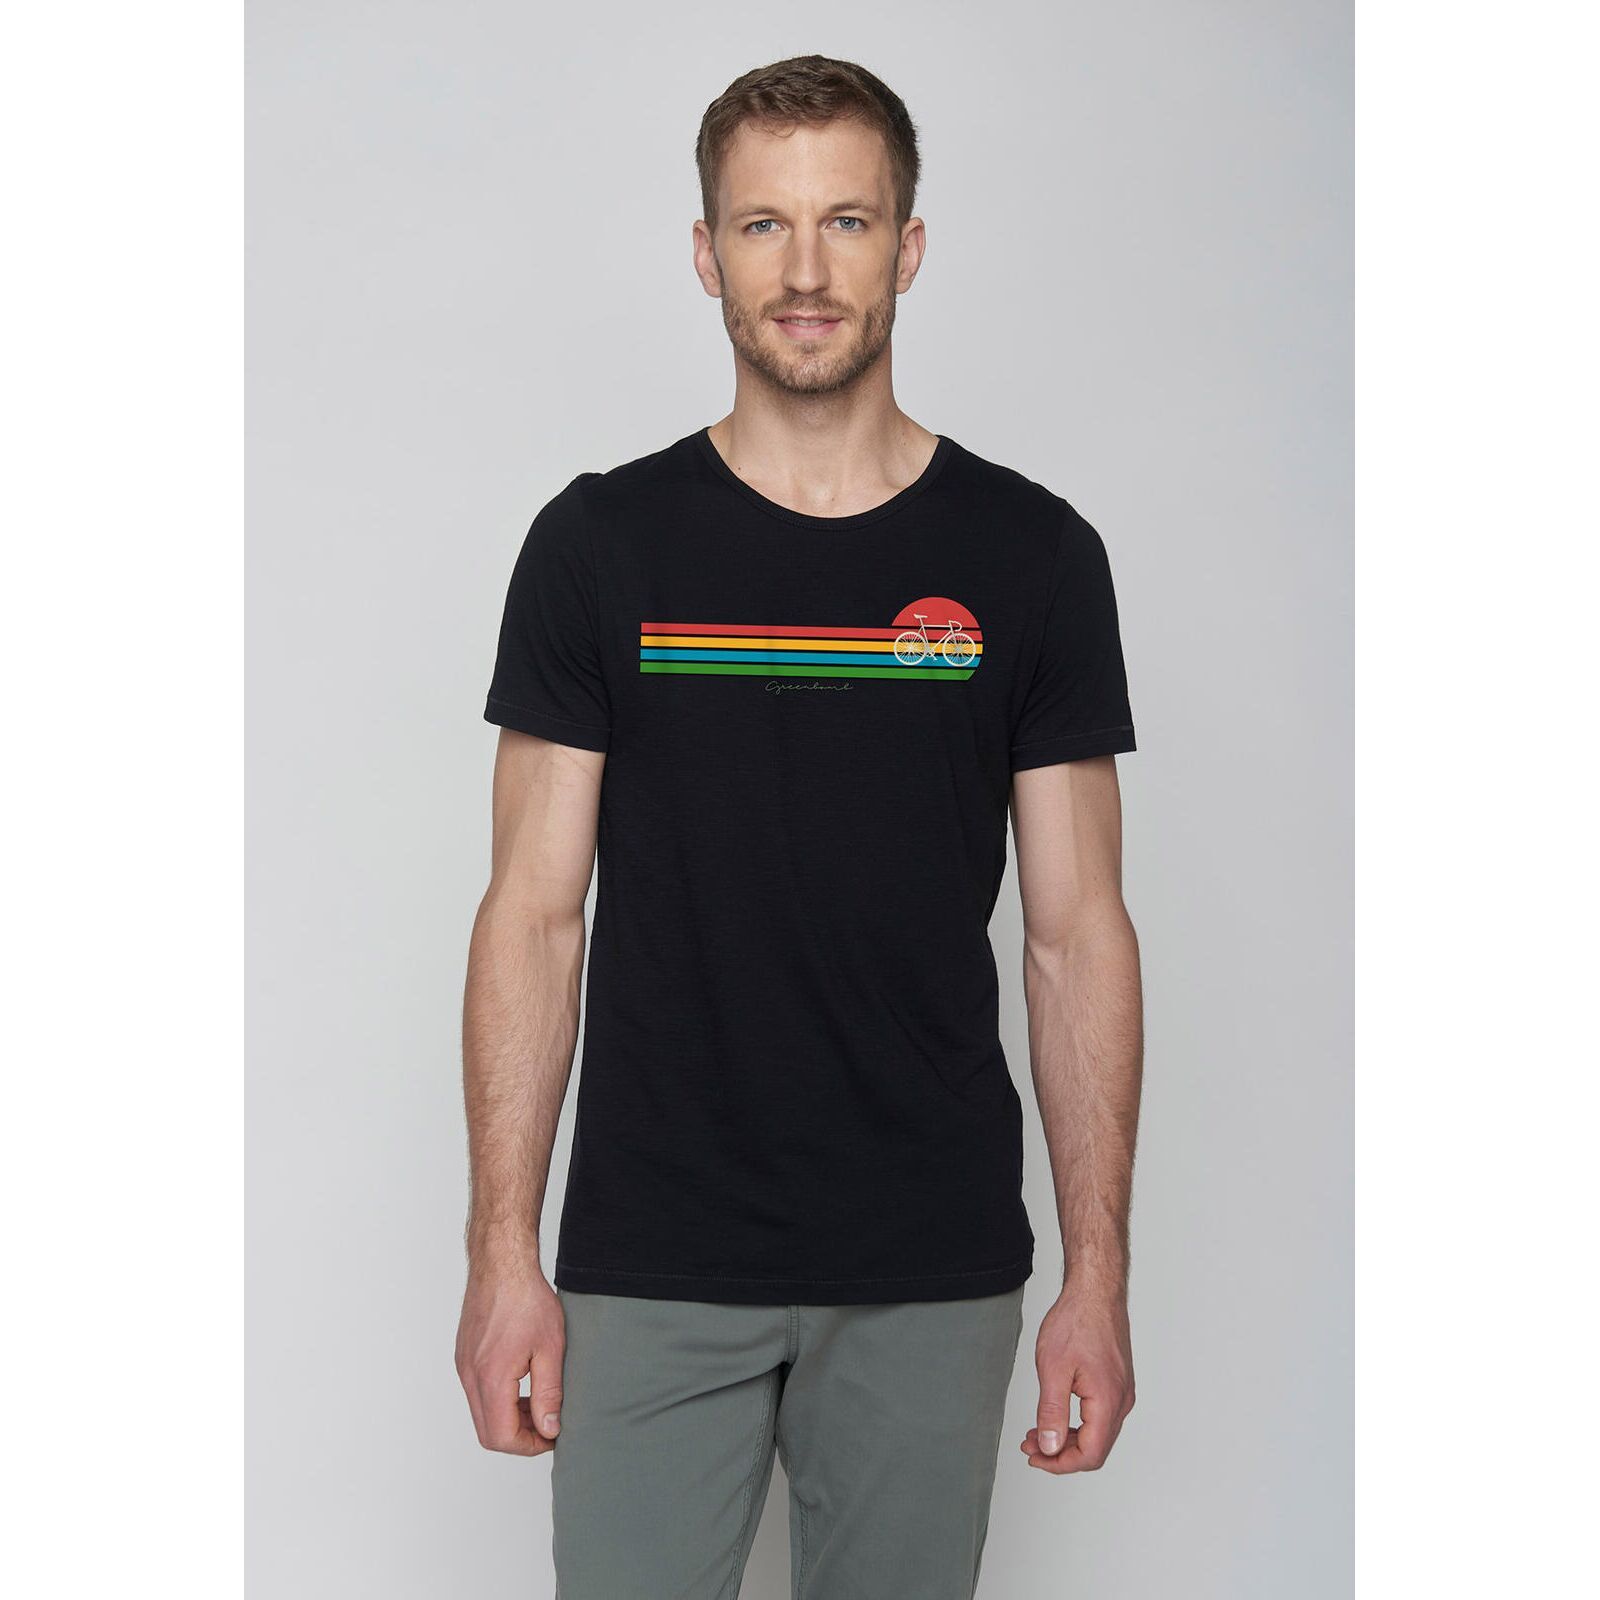 GREENBOMB Herren T-Shirt BIKE SUNSET STRIPES Spice black